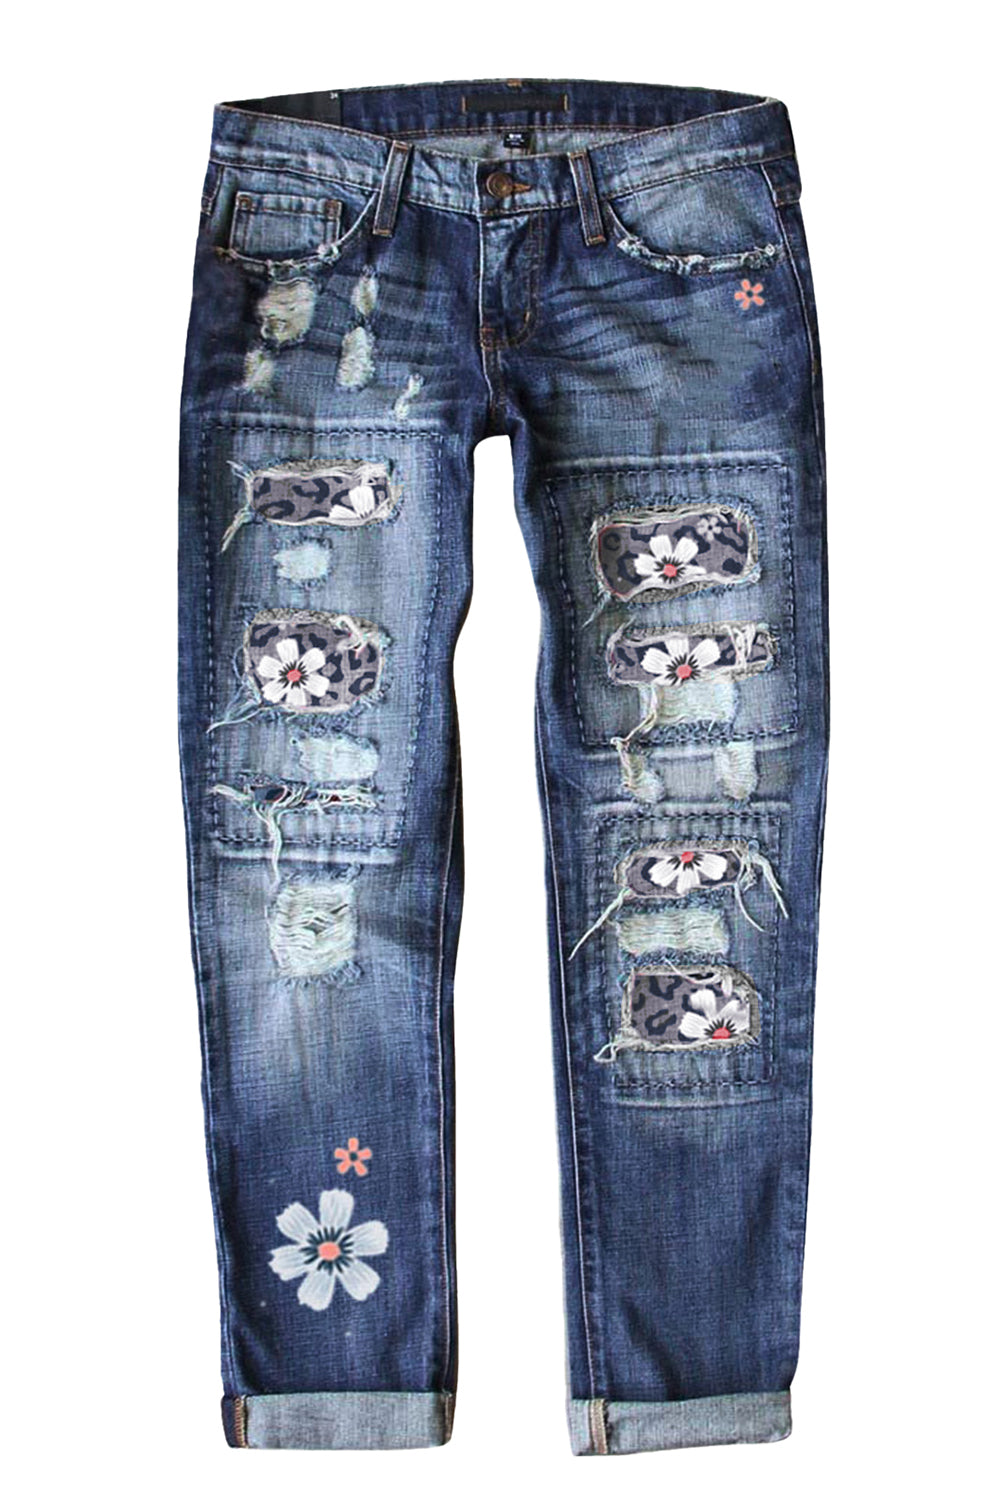 Gray Floral Leopard Ripped Boyfriend Distressed Denim Pants Jeans LC782289-11